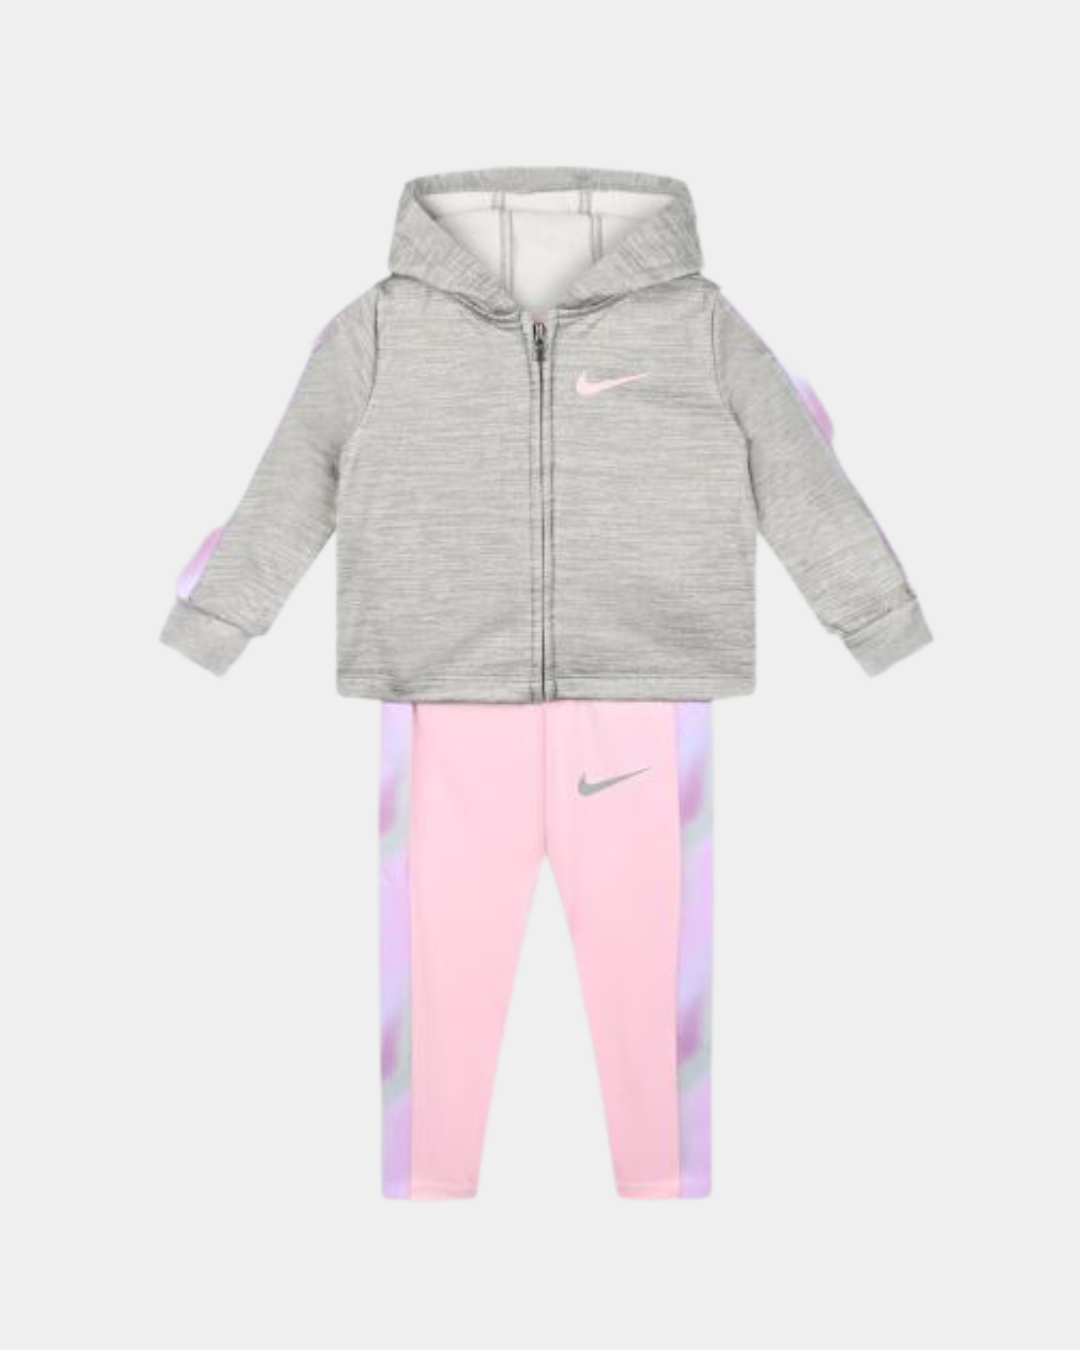 Nike Baby Therma-Fit Set - Grey/Pink